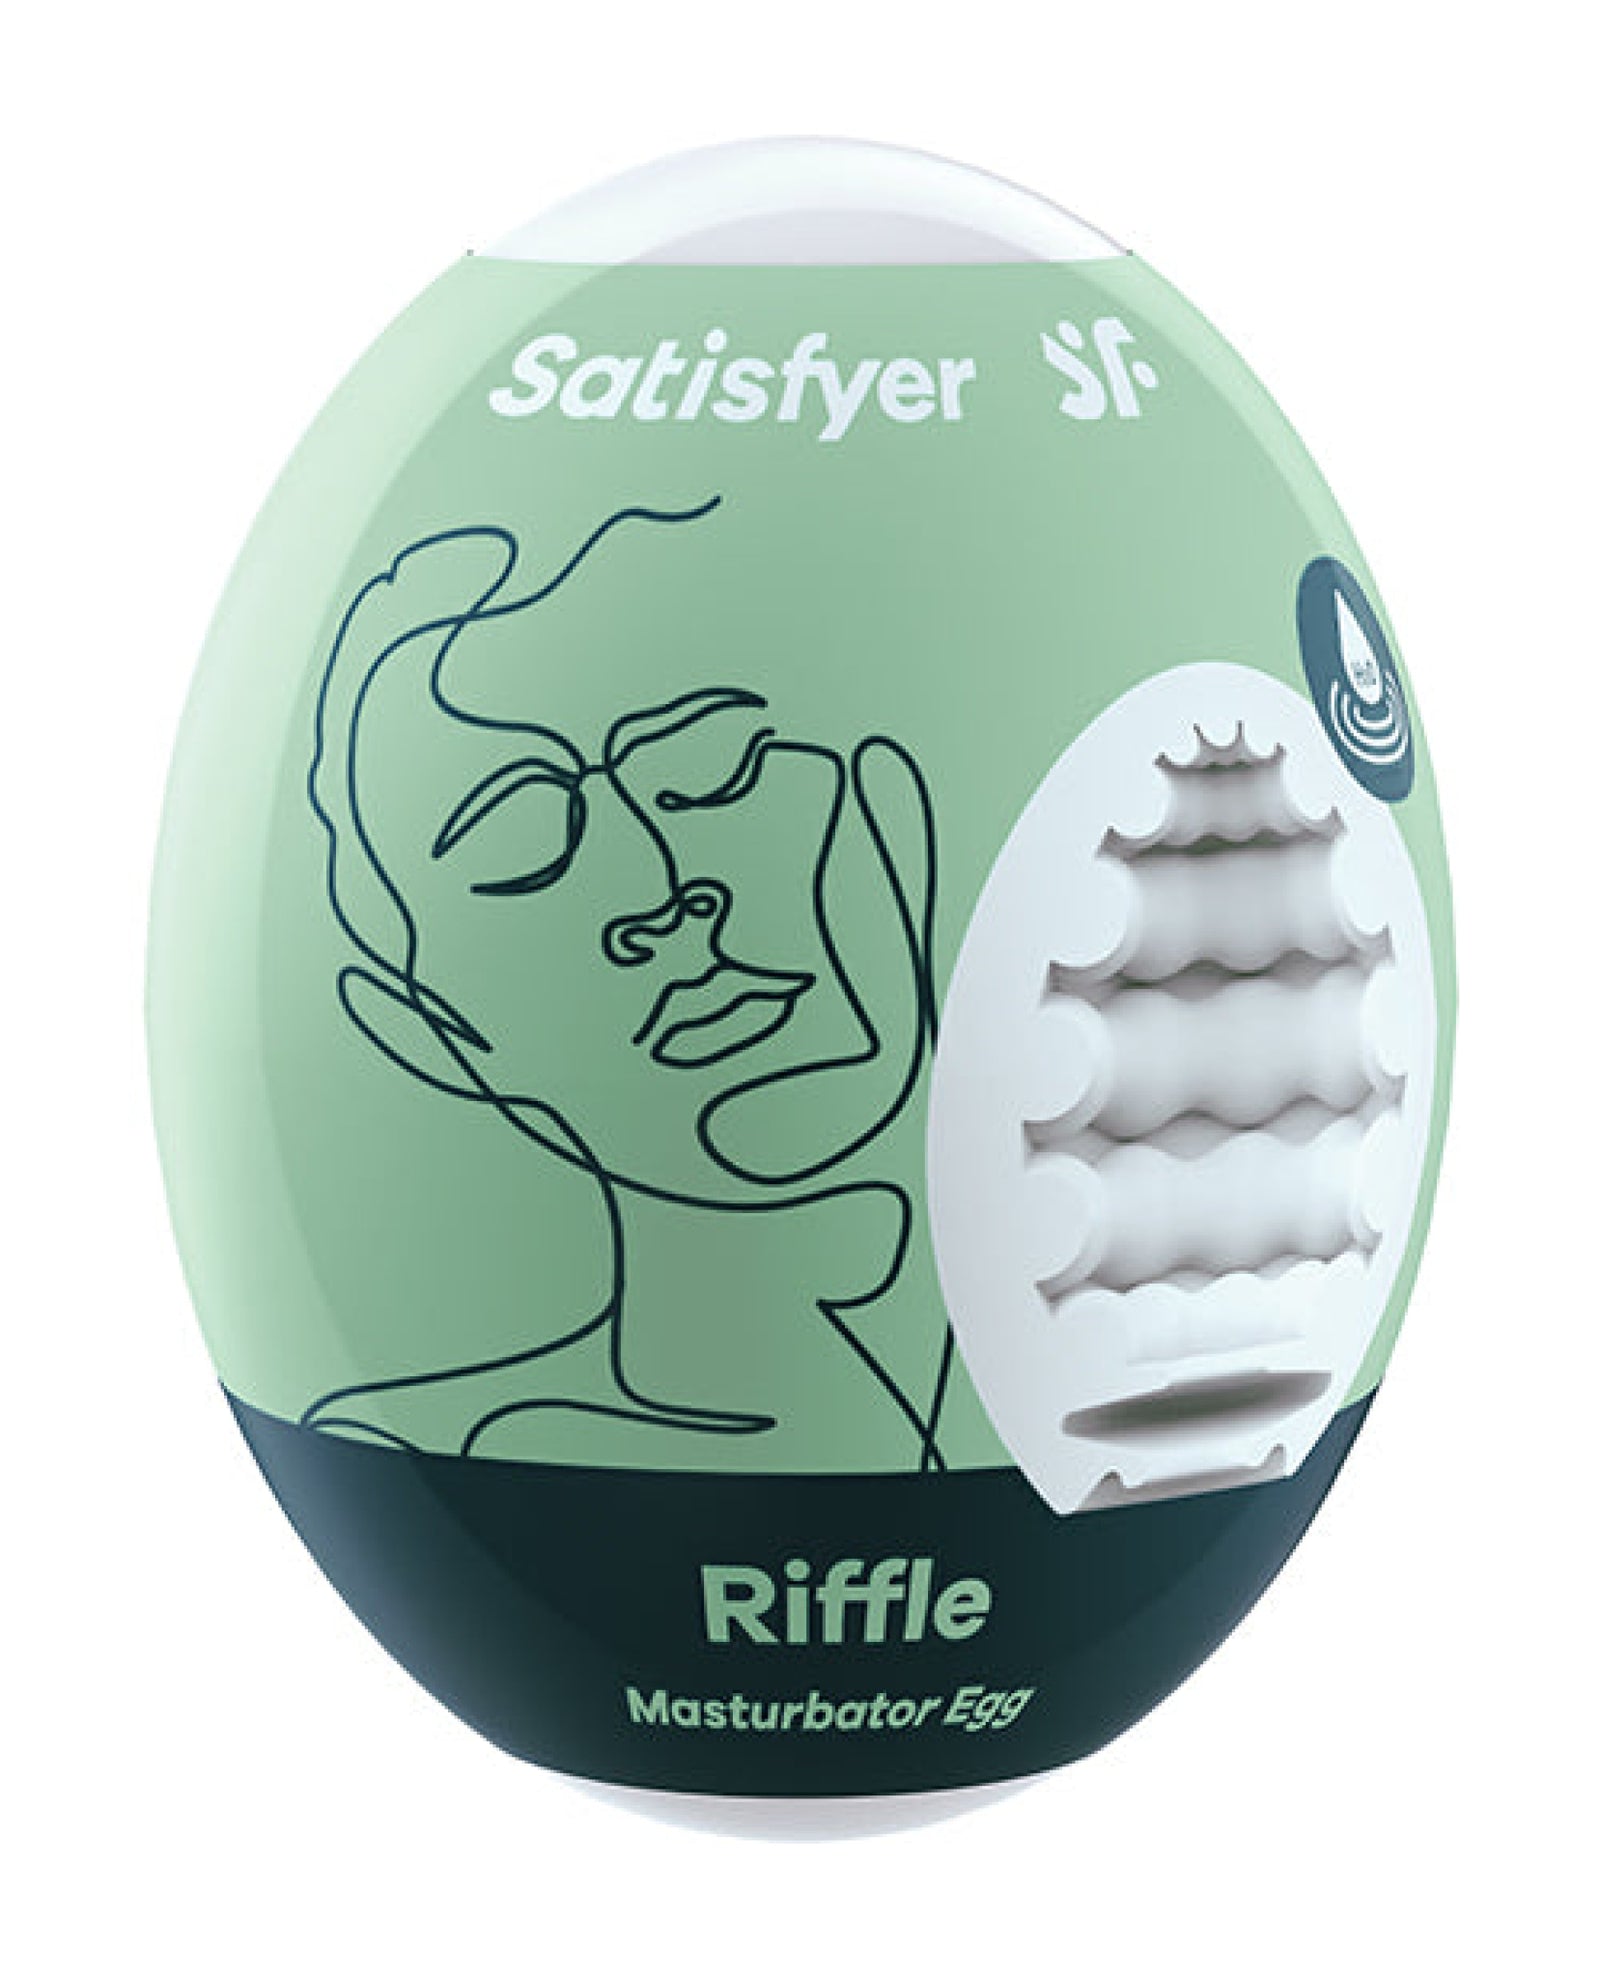 Satisfyer Masturbator Egg - Riffle Satisfyer®